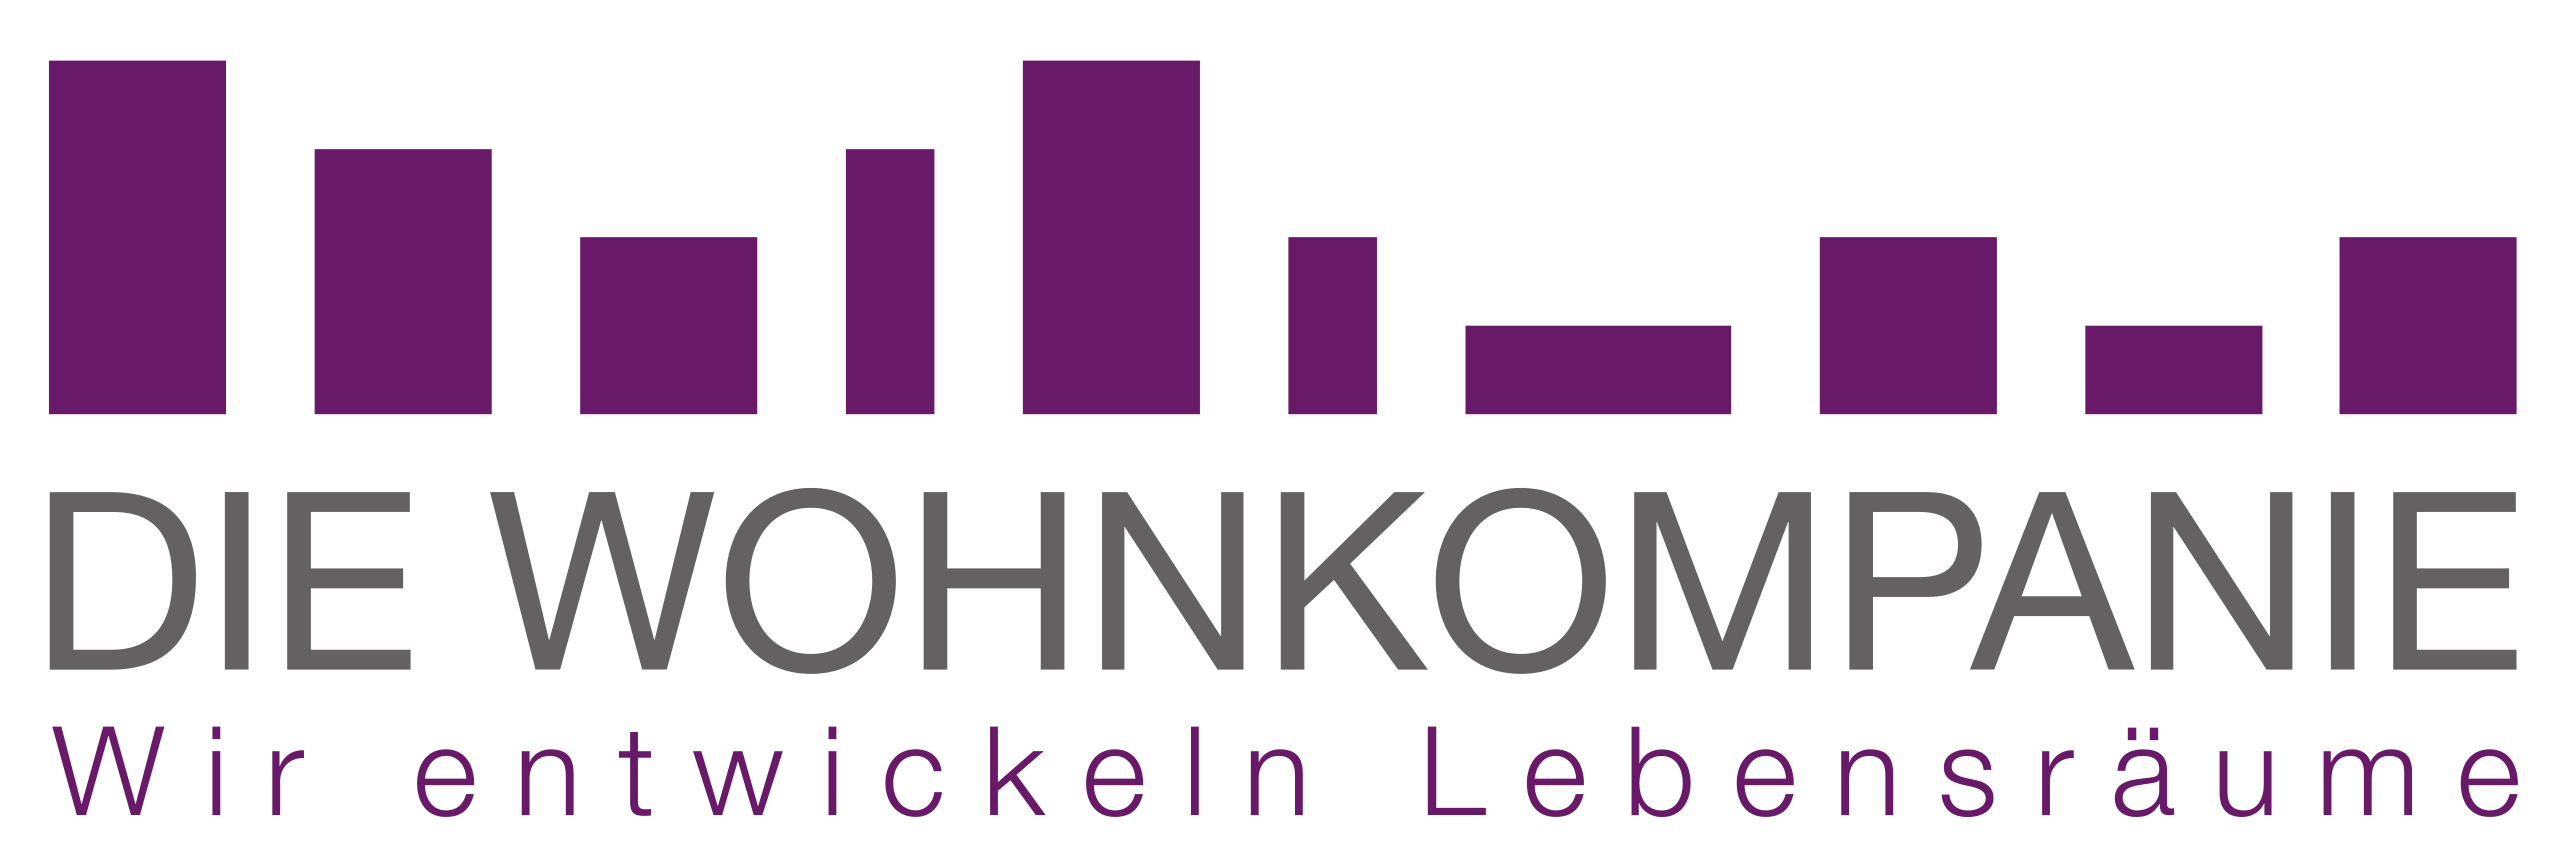 DWK Die Wohnkompanie GmbH